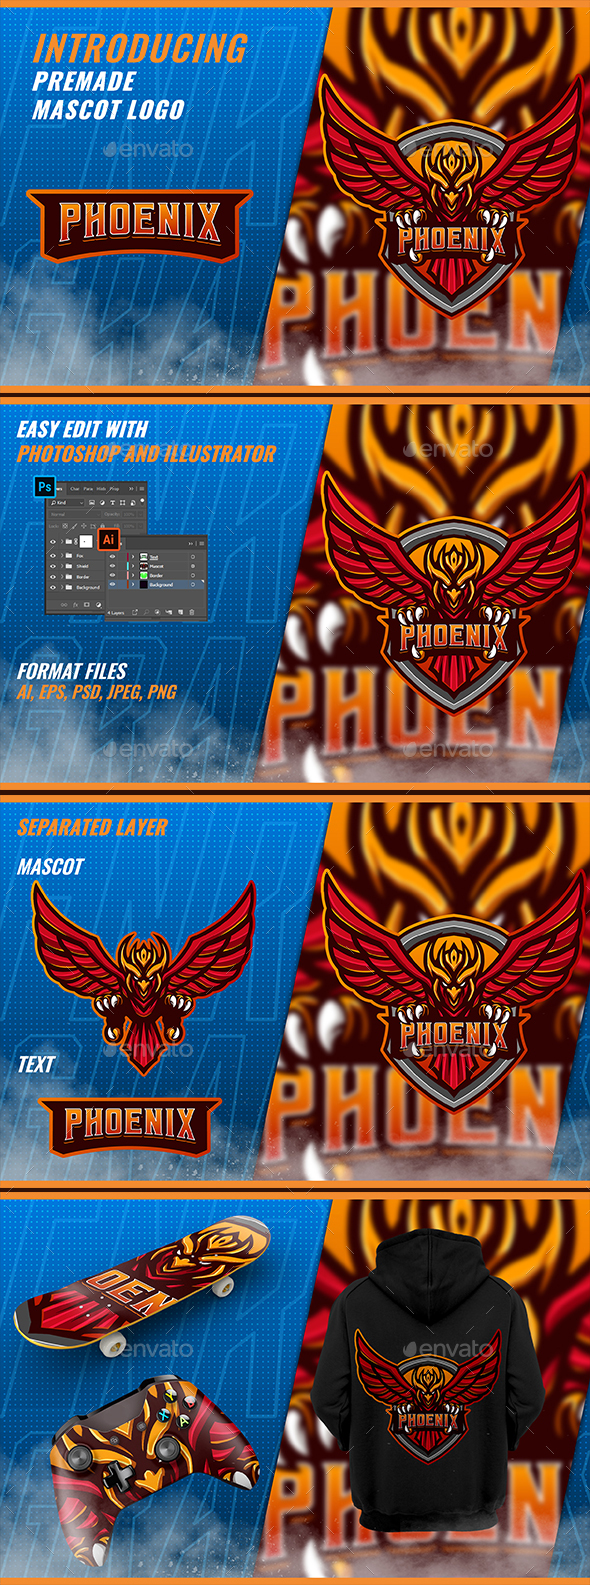 Guardian Phoenix - Mascot Esport Logo Template